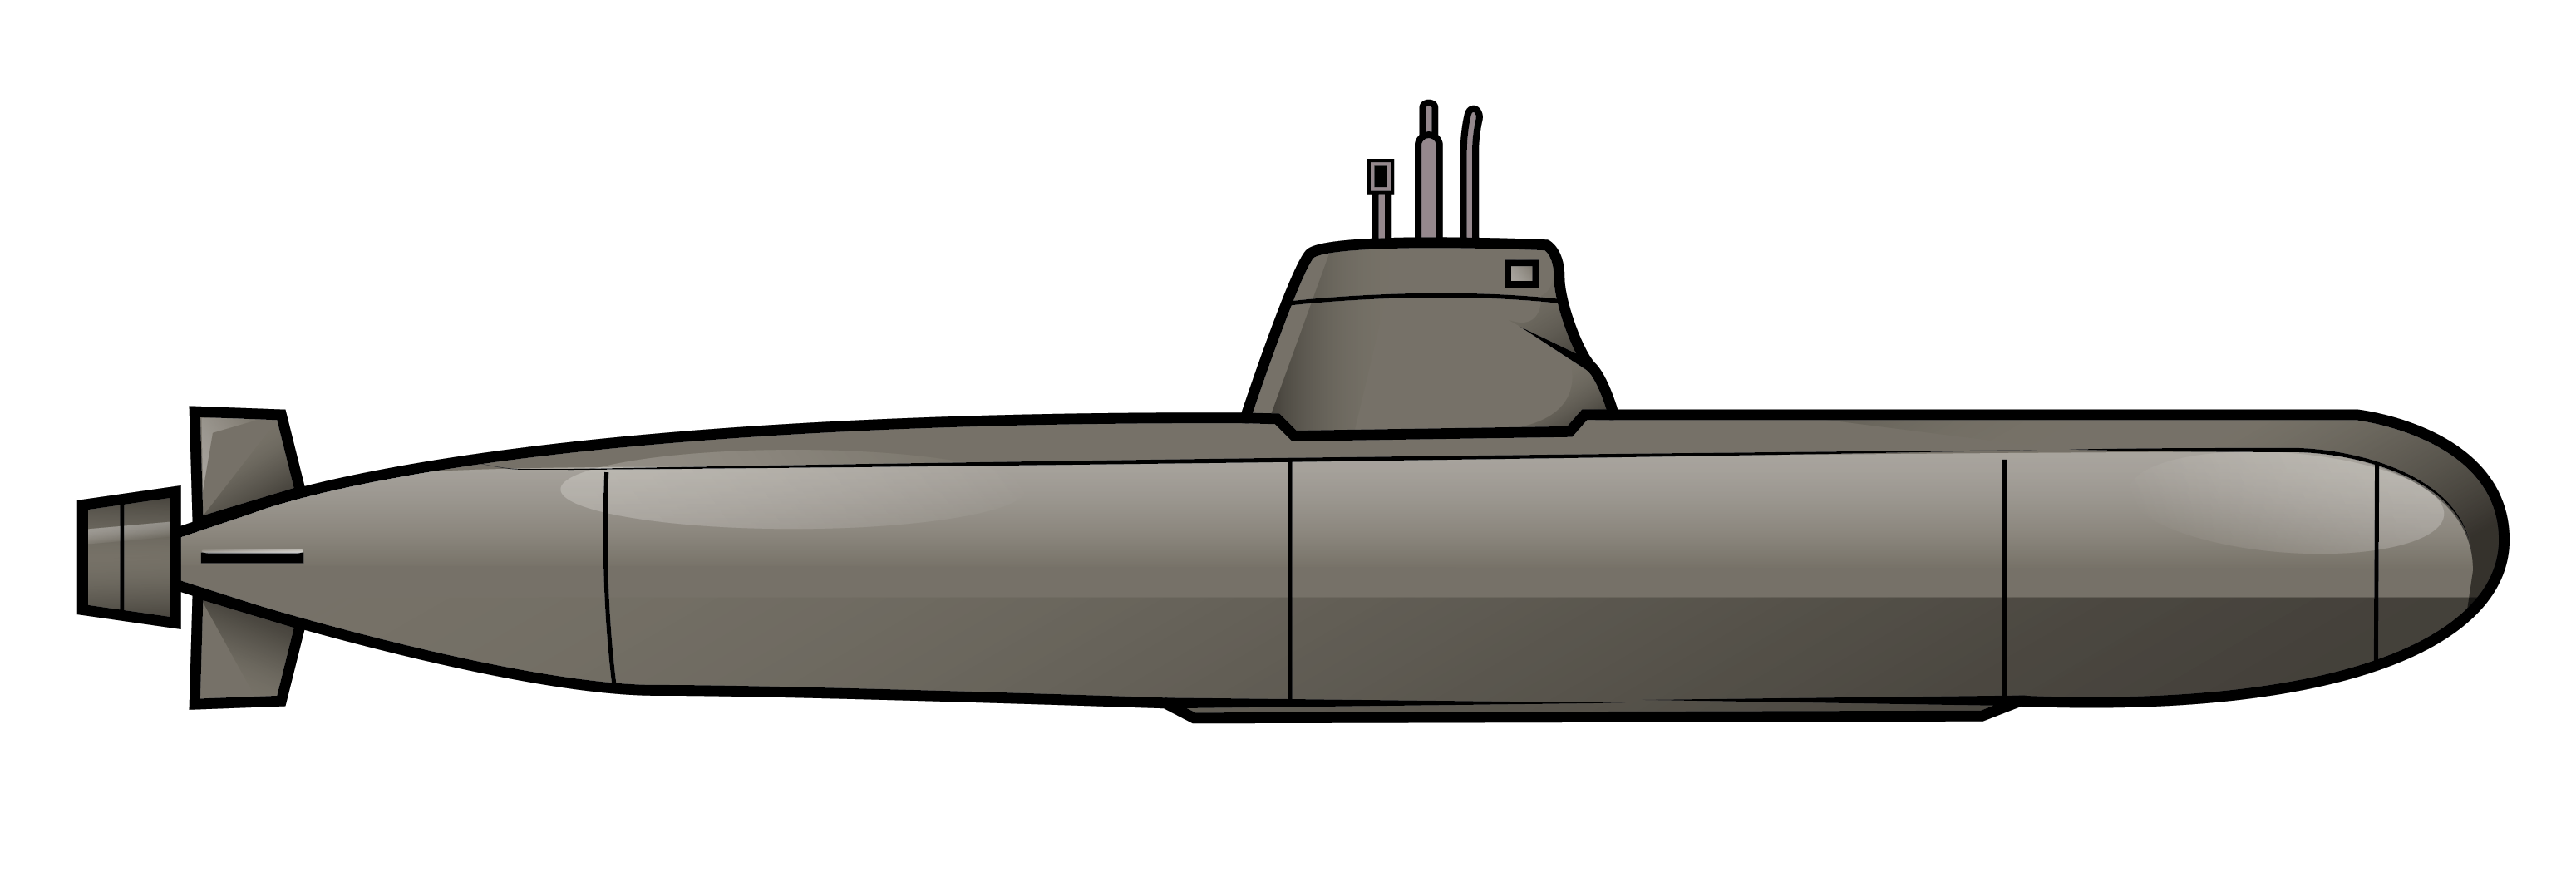 Cartoon Submarine - ClipArt B